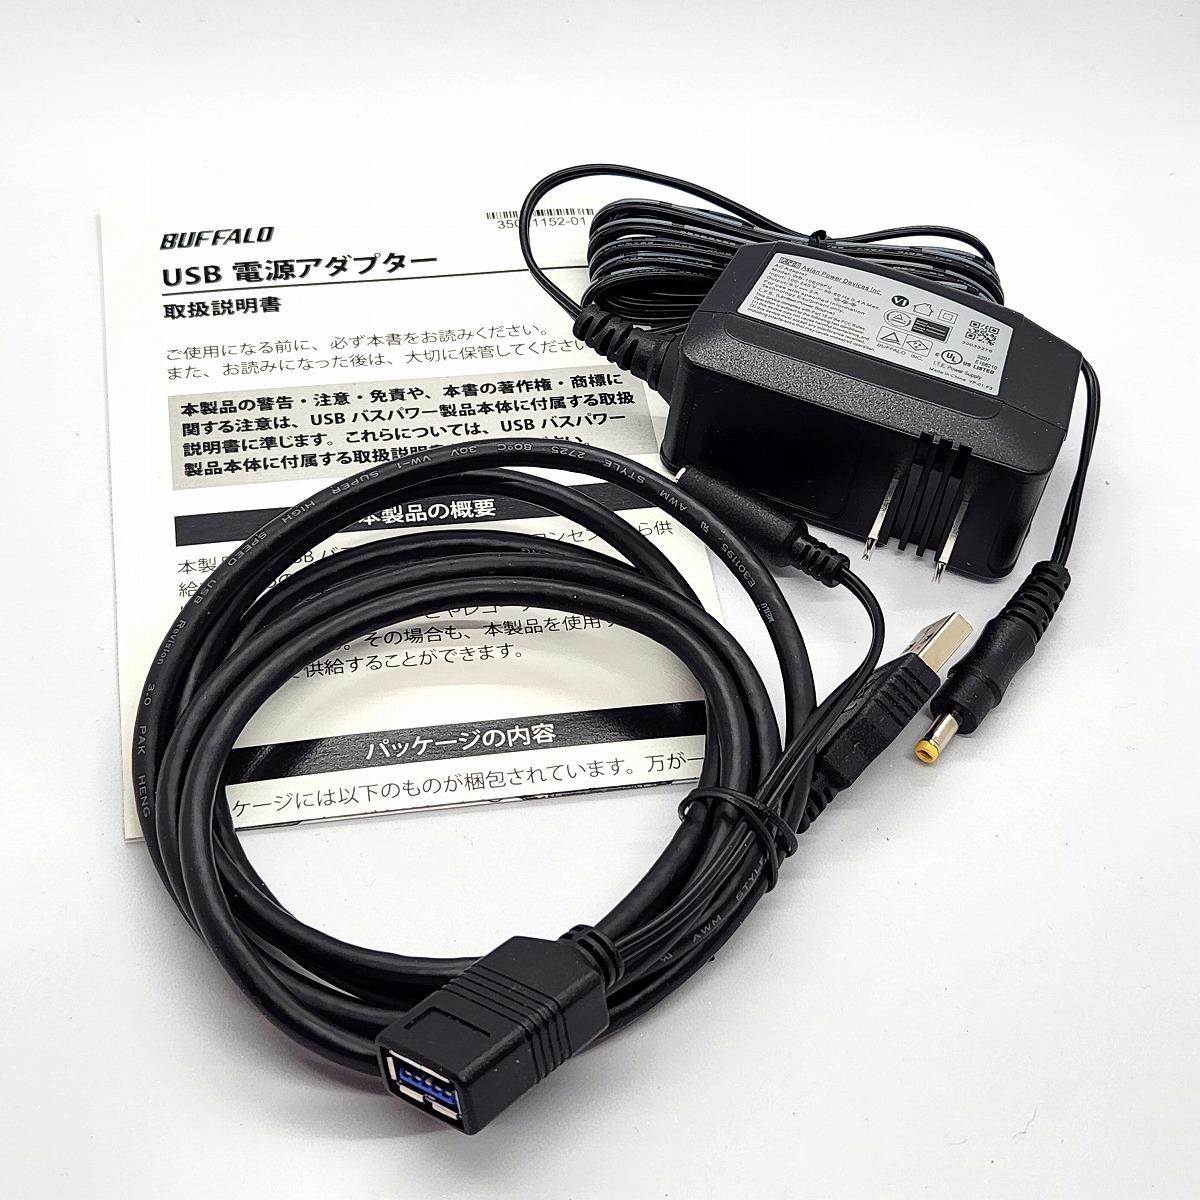 BUFFALO バッファロー AC-DC5PSC2 USB3.0 / 2.0 対応 ポータブルHDD向け給電用ACアダプター WB-10E05FU HD-PCFU3 / HD-PNFU3 / HD-PUSU3